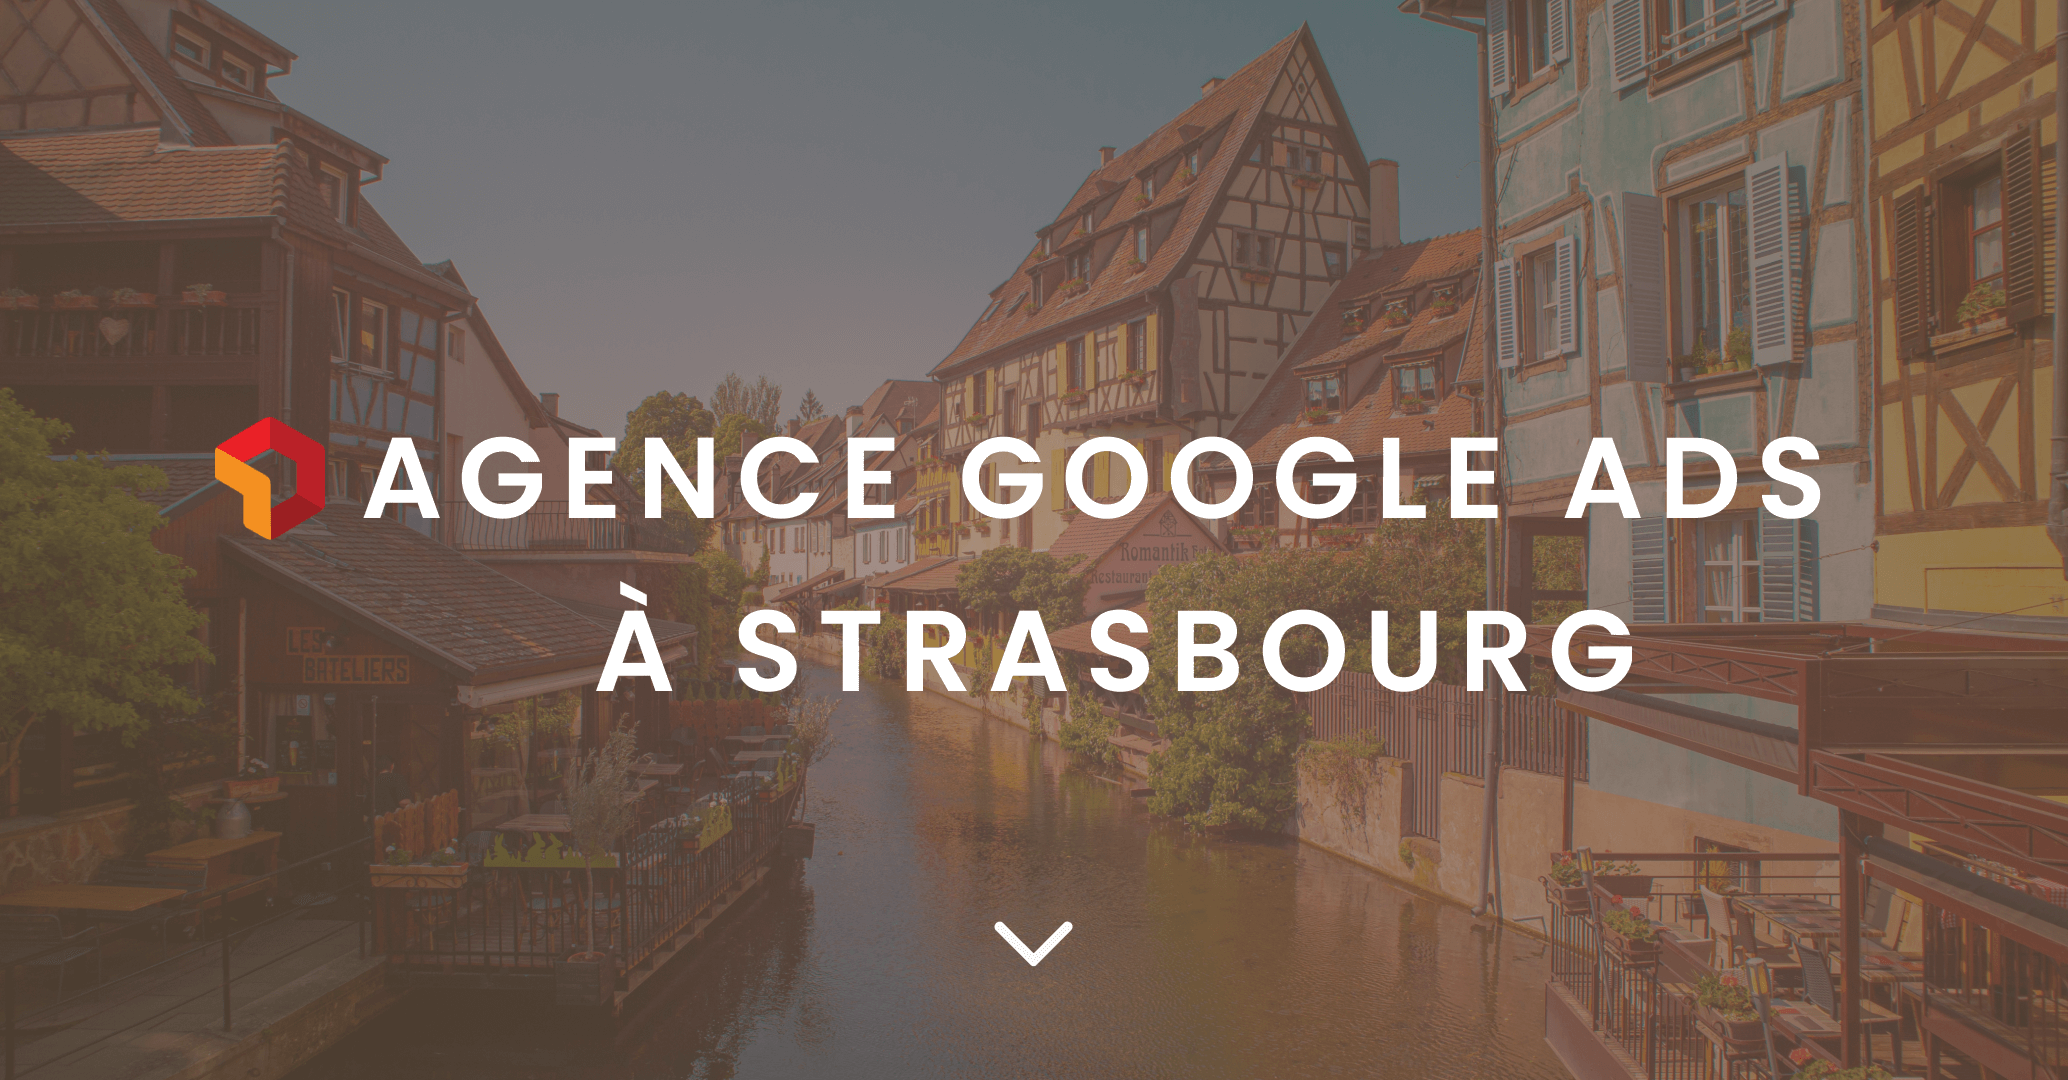 Agence Google Ads Strasbourg (1)